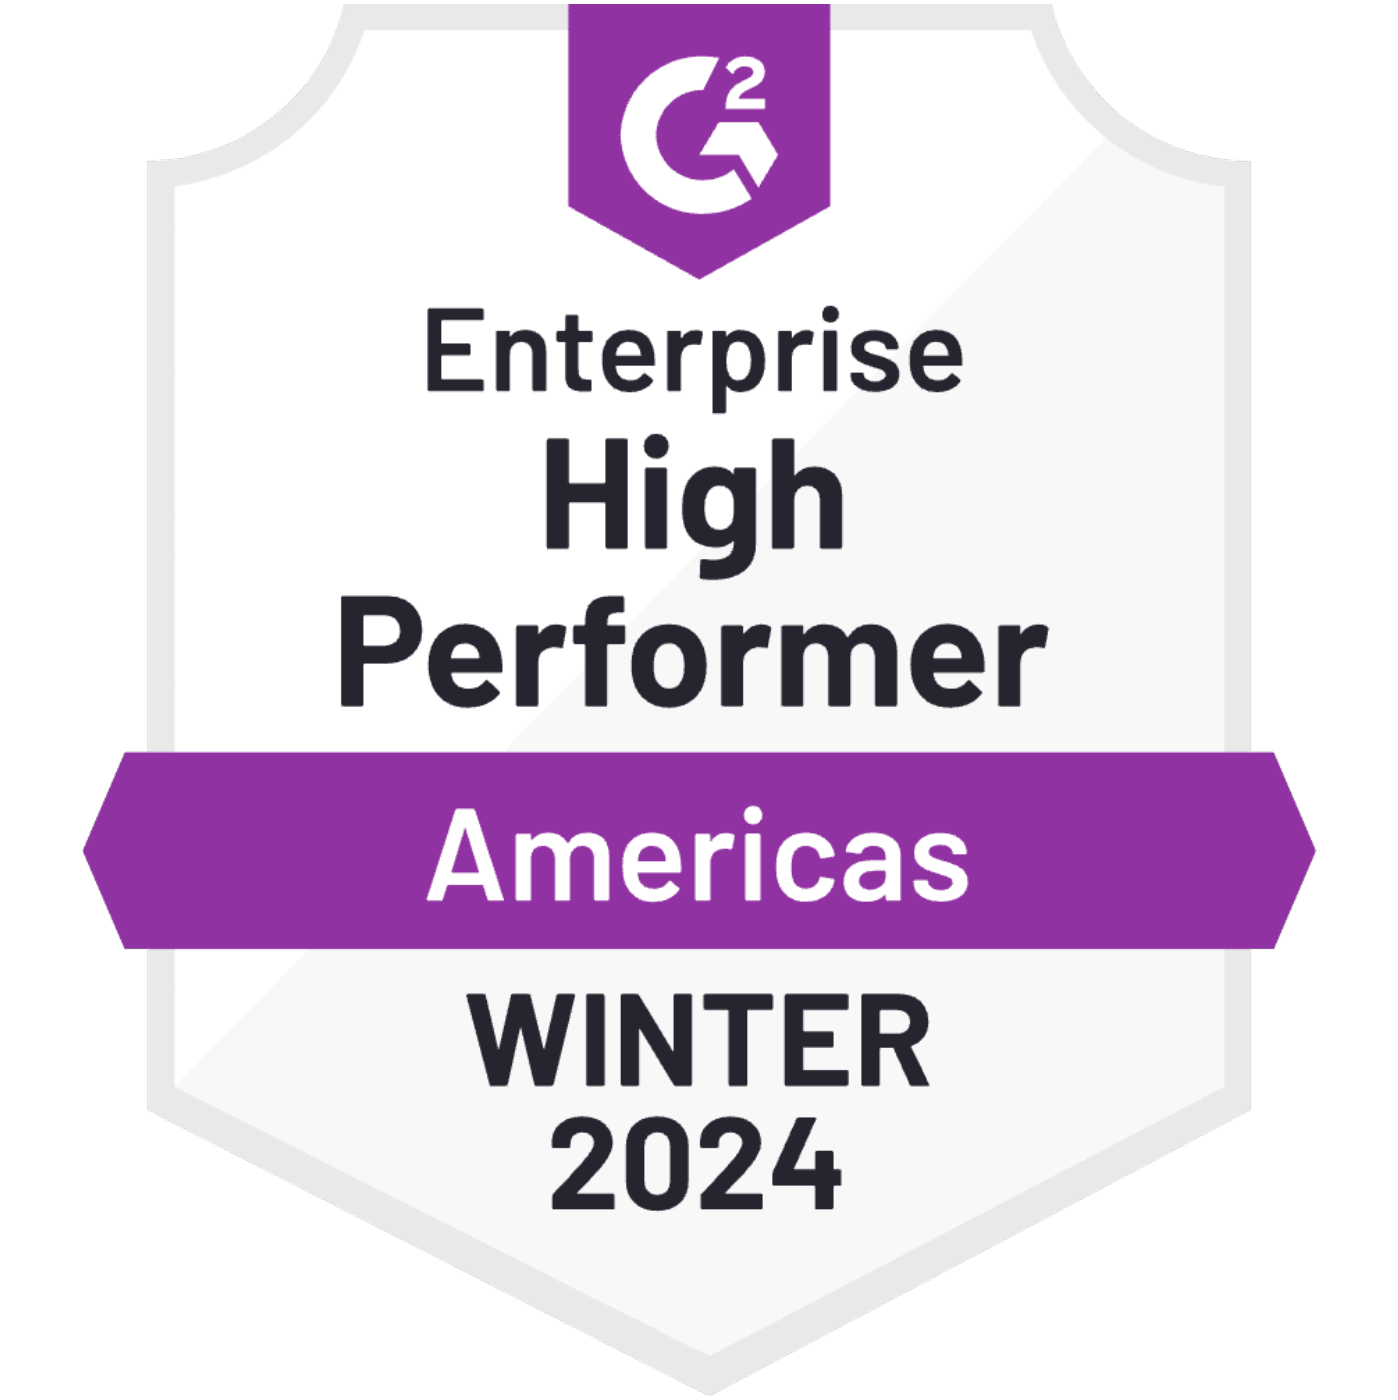 G2_Enterprise_High_Performer_Americas_Winter_2024